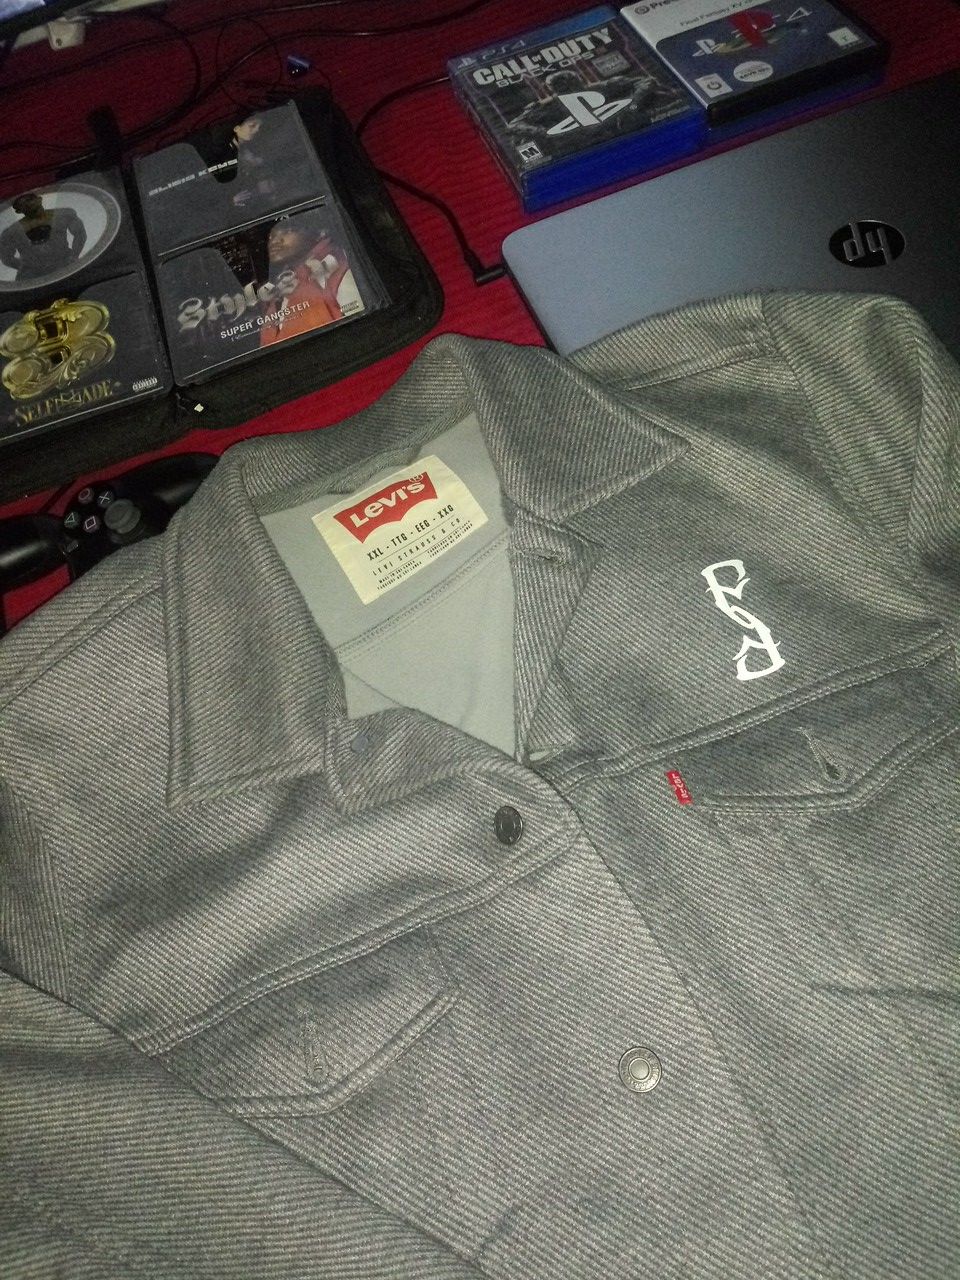 Levis custom limited .. Foniaf clothing jacket